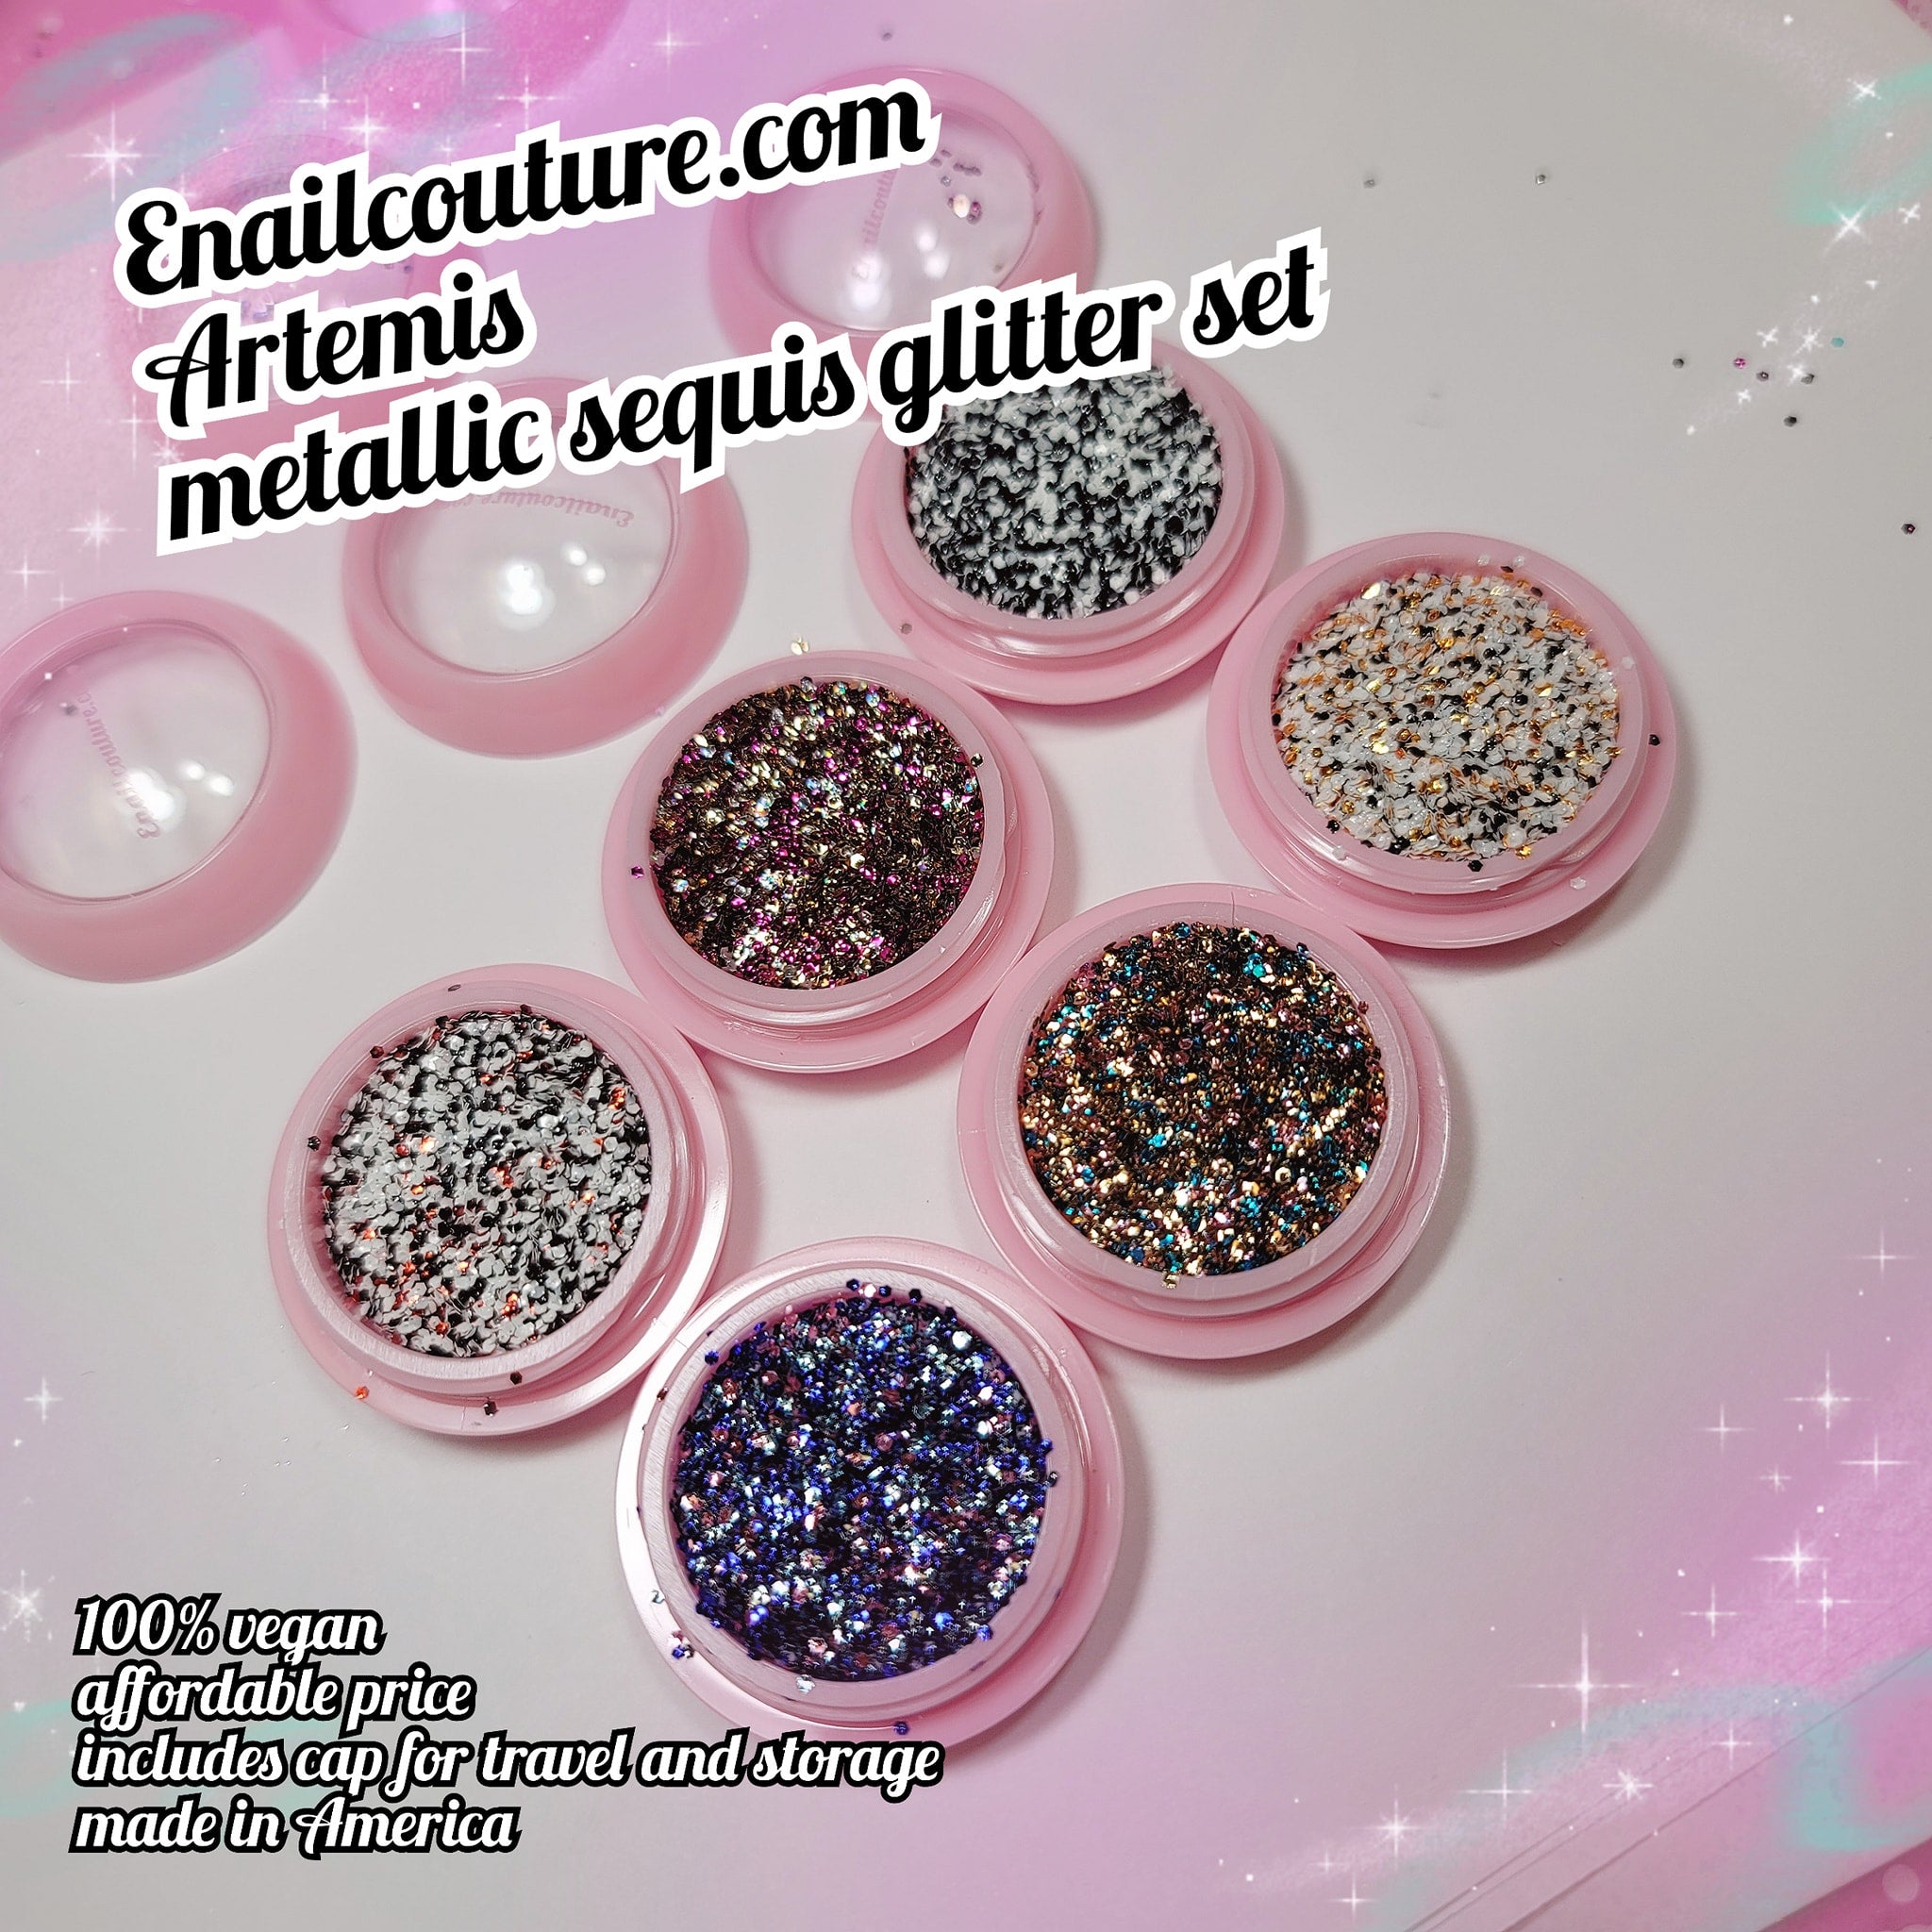 Arthemis metallic sequins Set (Set of 6 Holographic Nail Glitter Mermaid Powder Flakes Shiny Charms Hexagon Nail Art Pigment Dust Decoration Manicure)